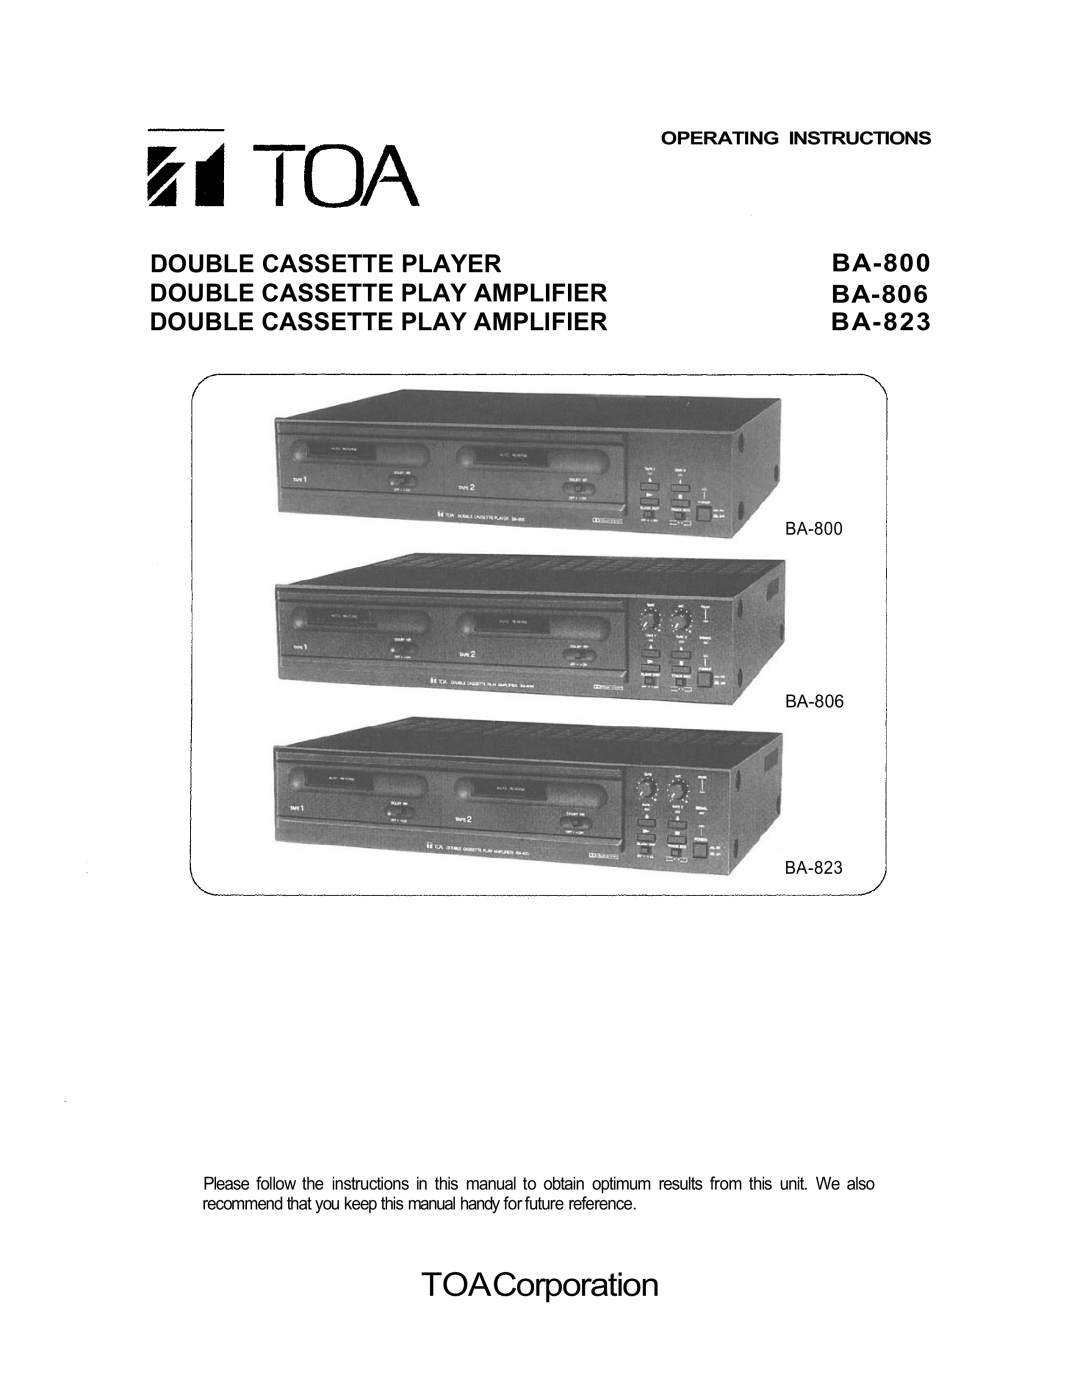 TOA Electronics manual Operating Instructions, BA-800 BA-806 BA-823, TOACorporation, Double Cassette Player 